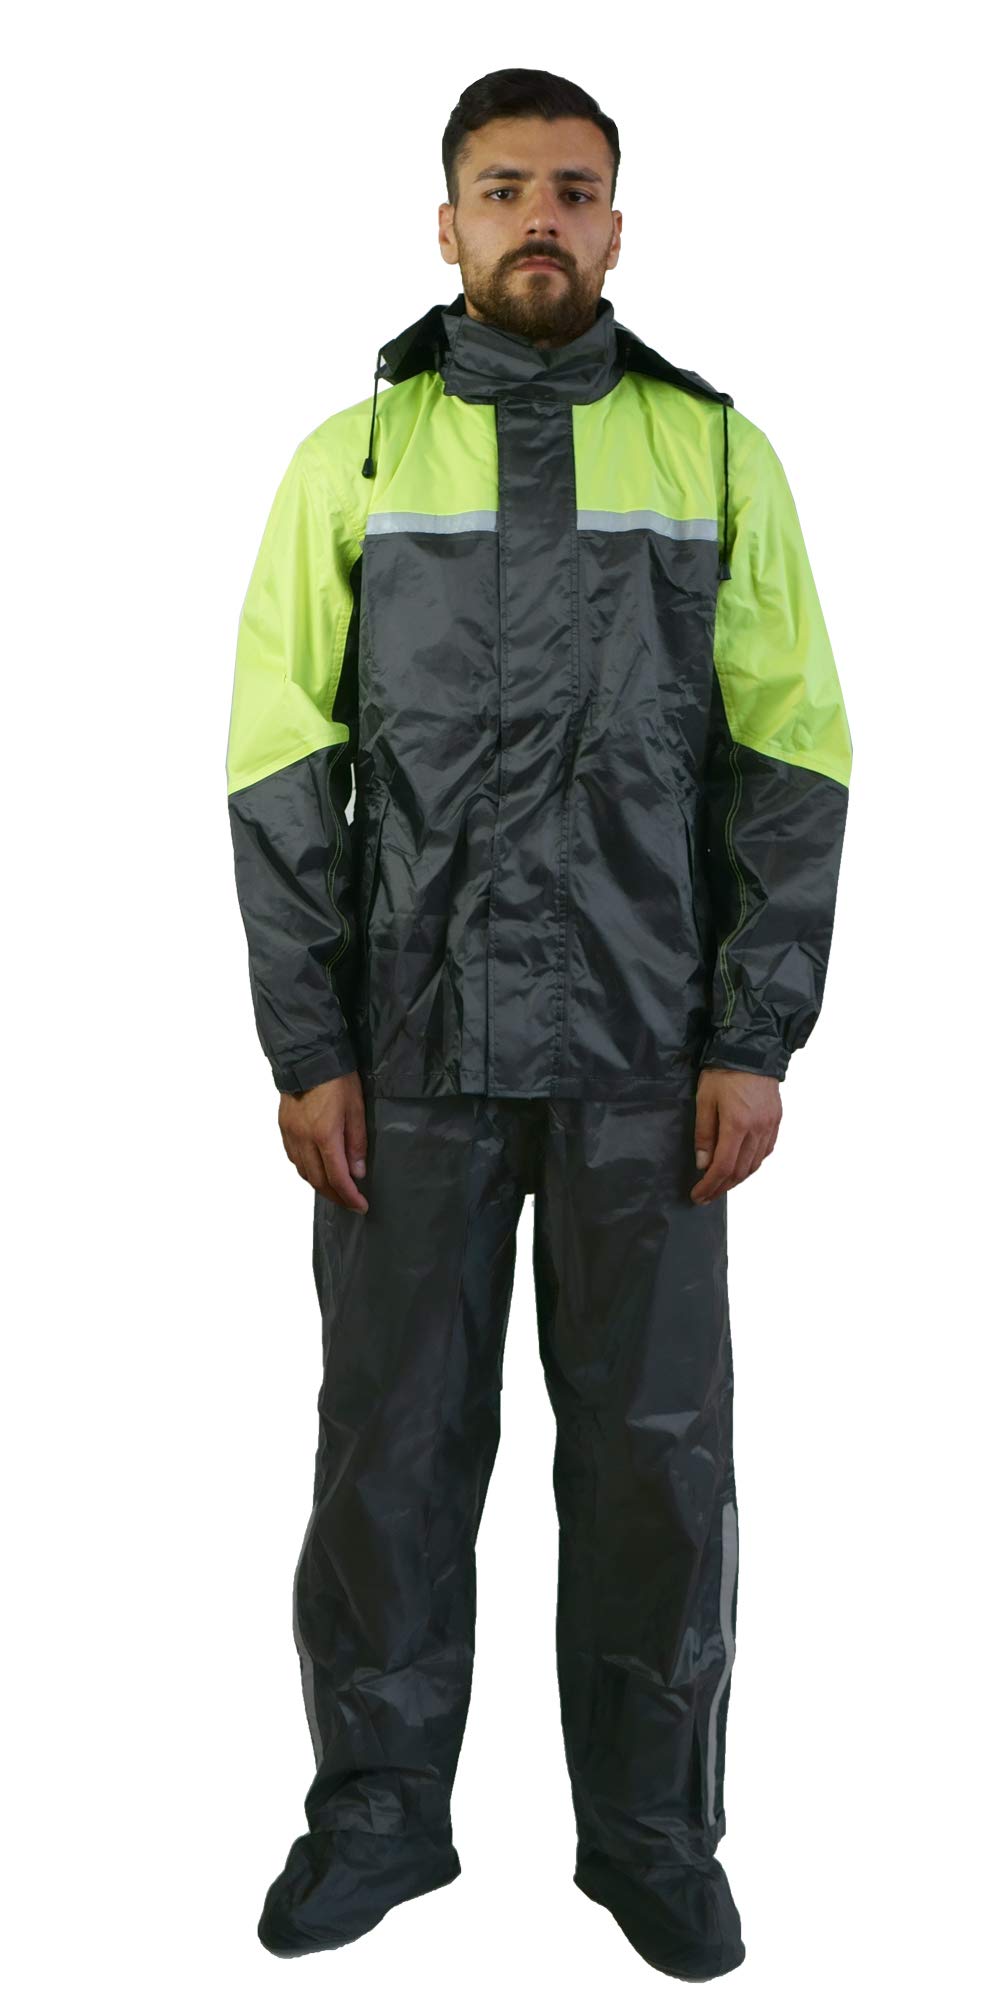 TJ MARVIN Regenschutz Set (Jacke, Hose, Stiefelbezug und Rucksäcke) CLASSICO E31 L Nero Giallo fluo von TJ MARVIN